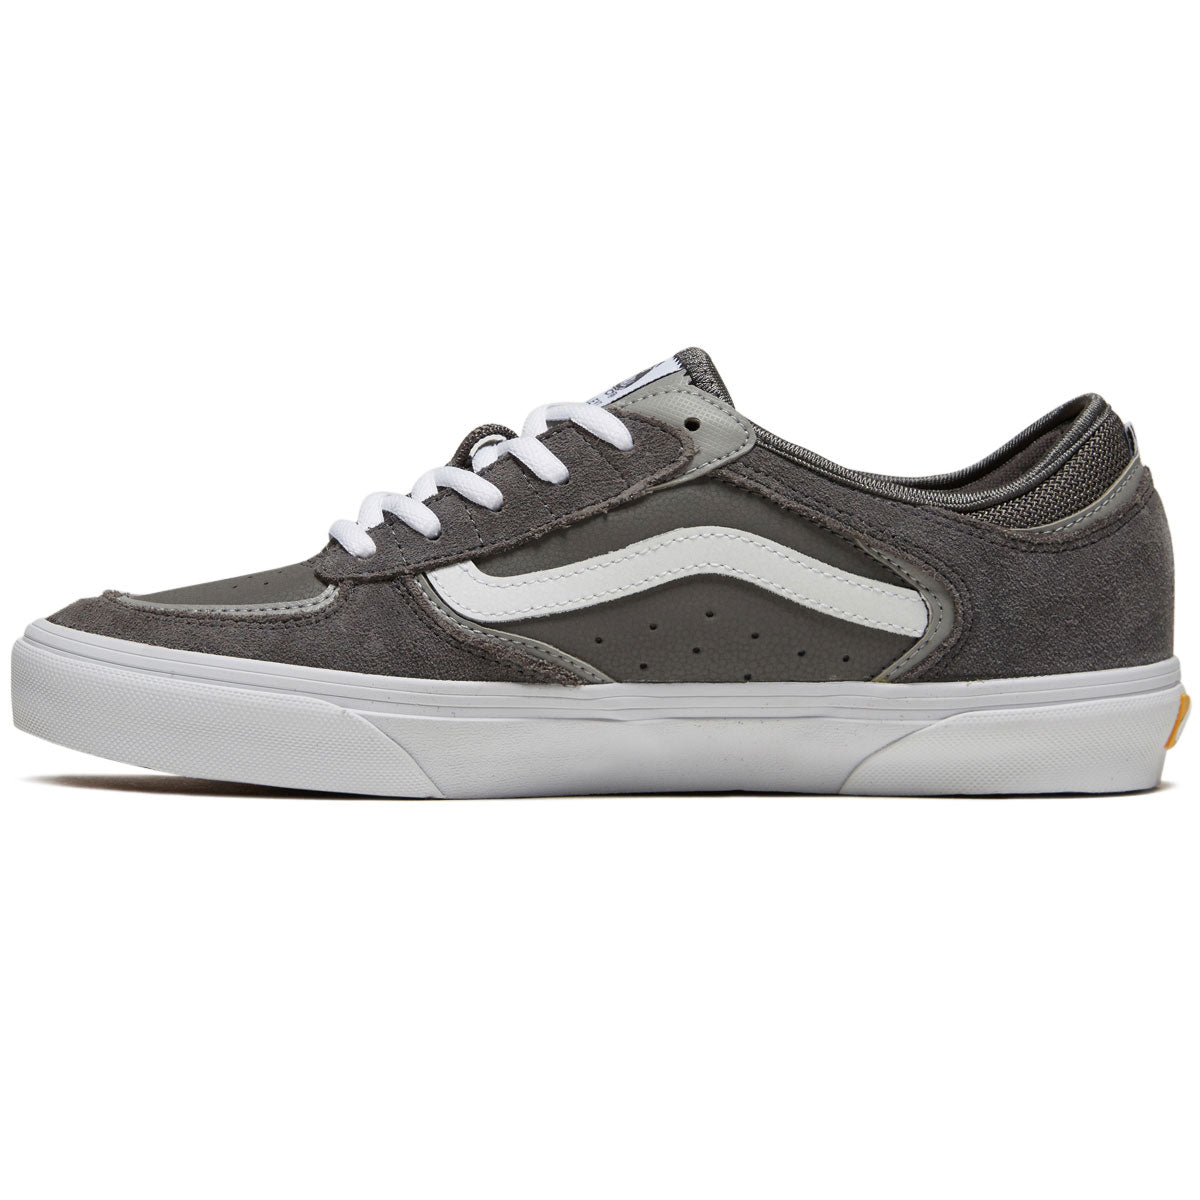 Vans Skate Rowley Shoes - Grey/White image 2